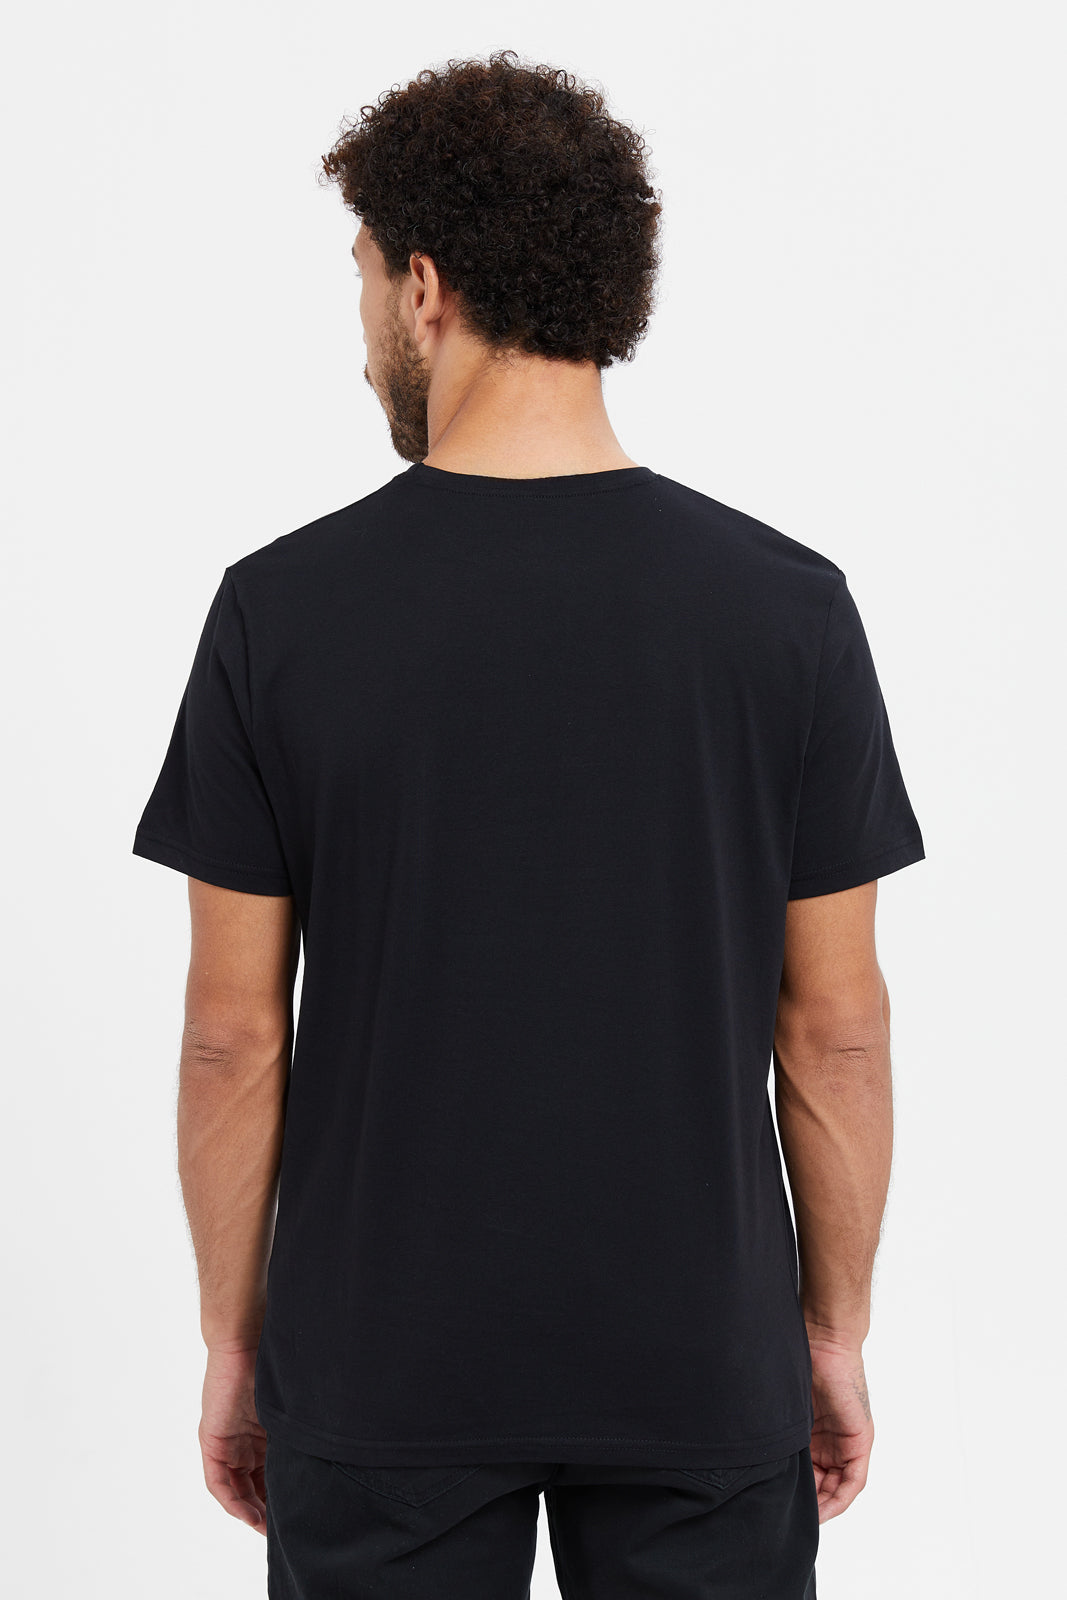 Buy Men Black Graphic T-Shirt 127523280 in Saudi Arabia | REDTAG